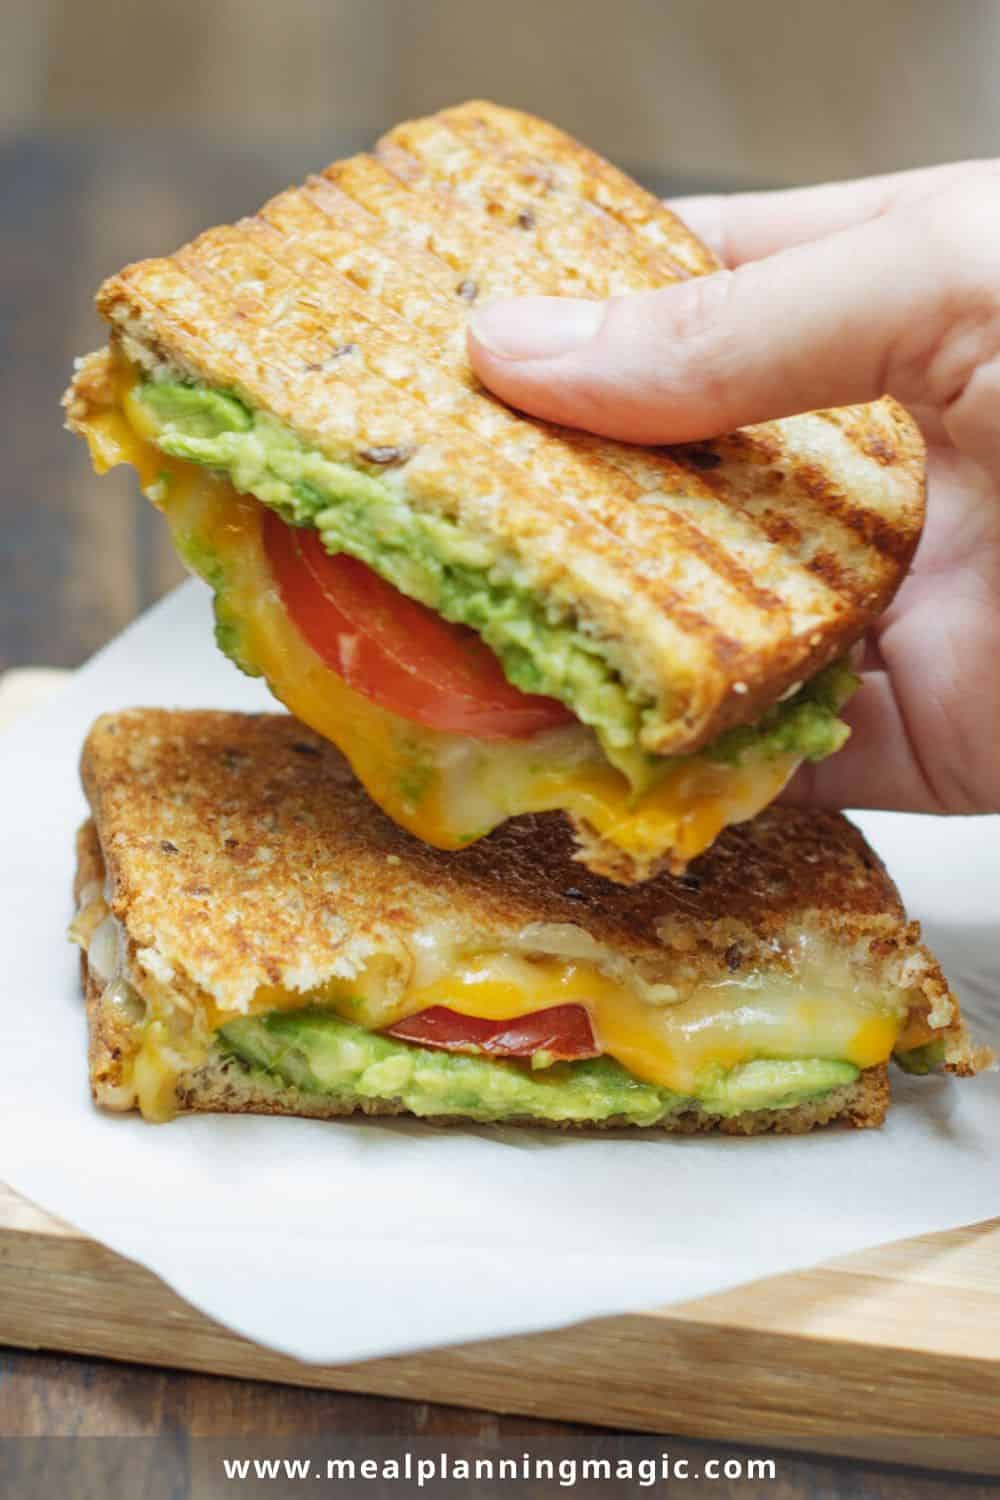 https://www.mealplanningmagic.com/wp-content/uploads/2020/07/MPM-Tomato-and-Avocado-Grilled-Cheese-Sandwich-Pin-3.jpg